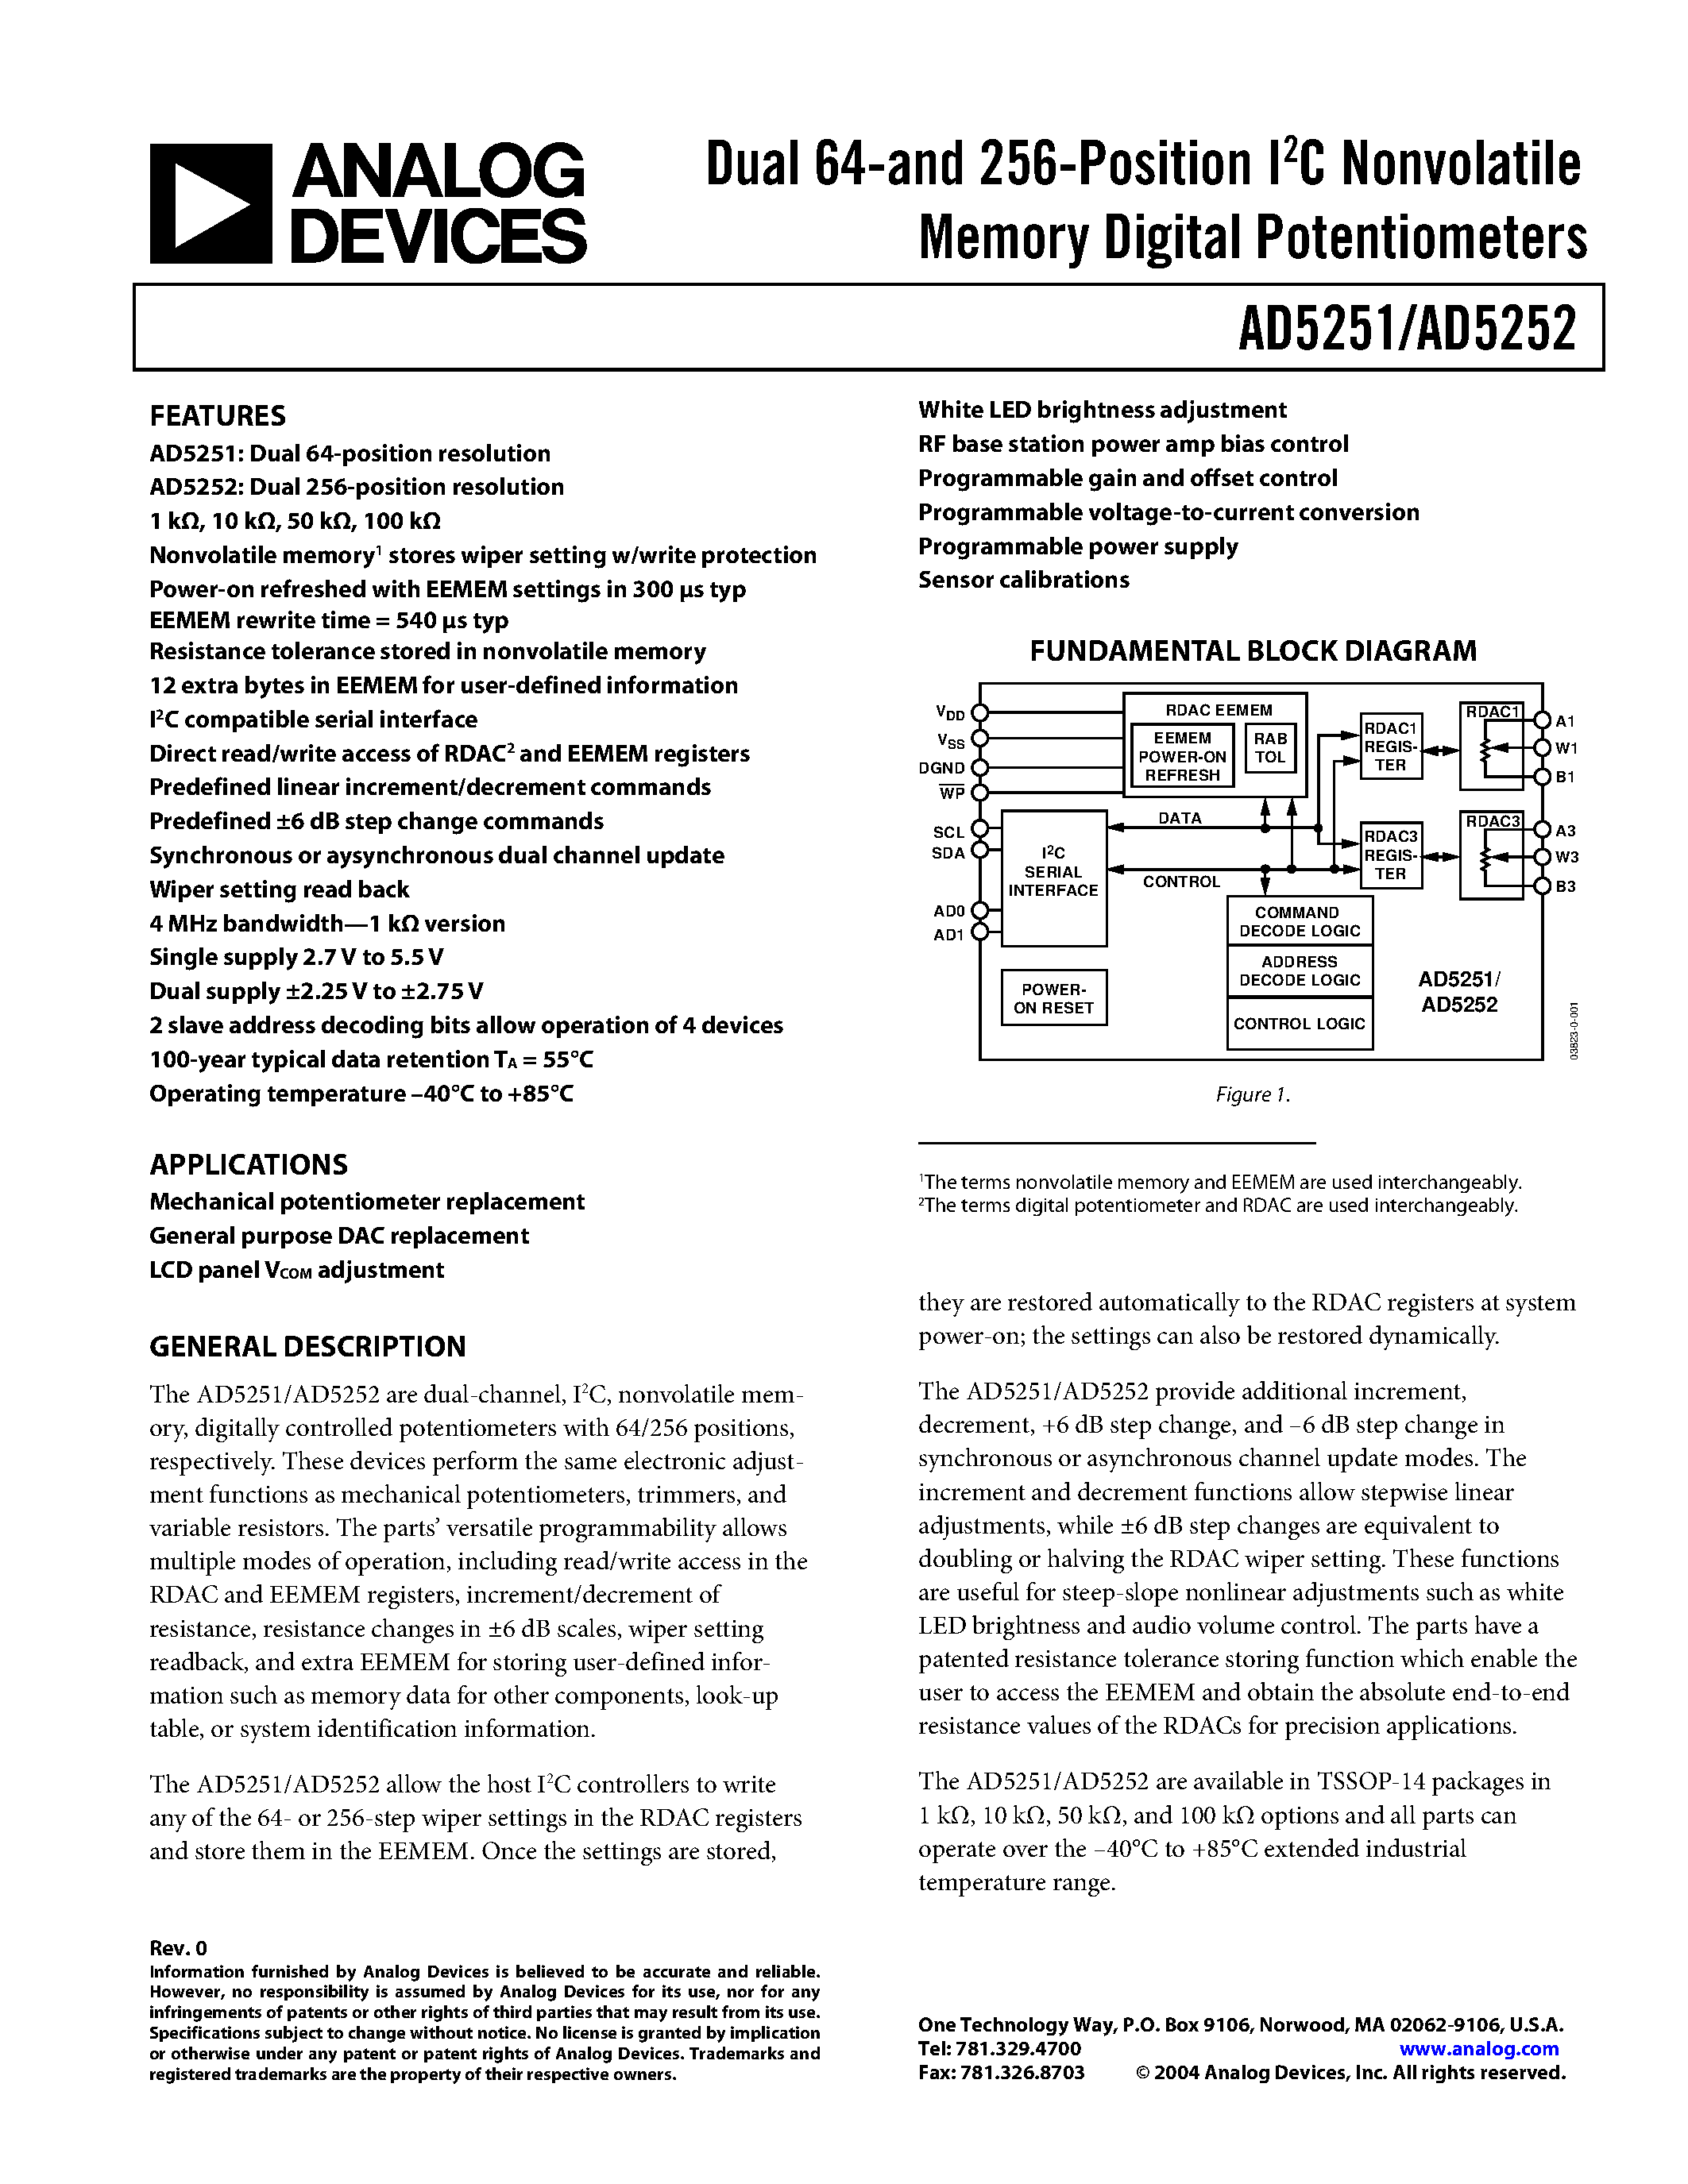 Даташит AD5251 - (AD5251 / AD5252) Dual 64-and 256-Position I2C Nonvolatile Memory Digital Potentiometers страница 1